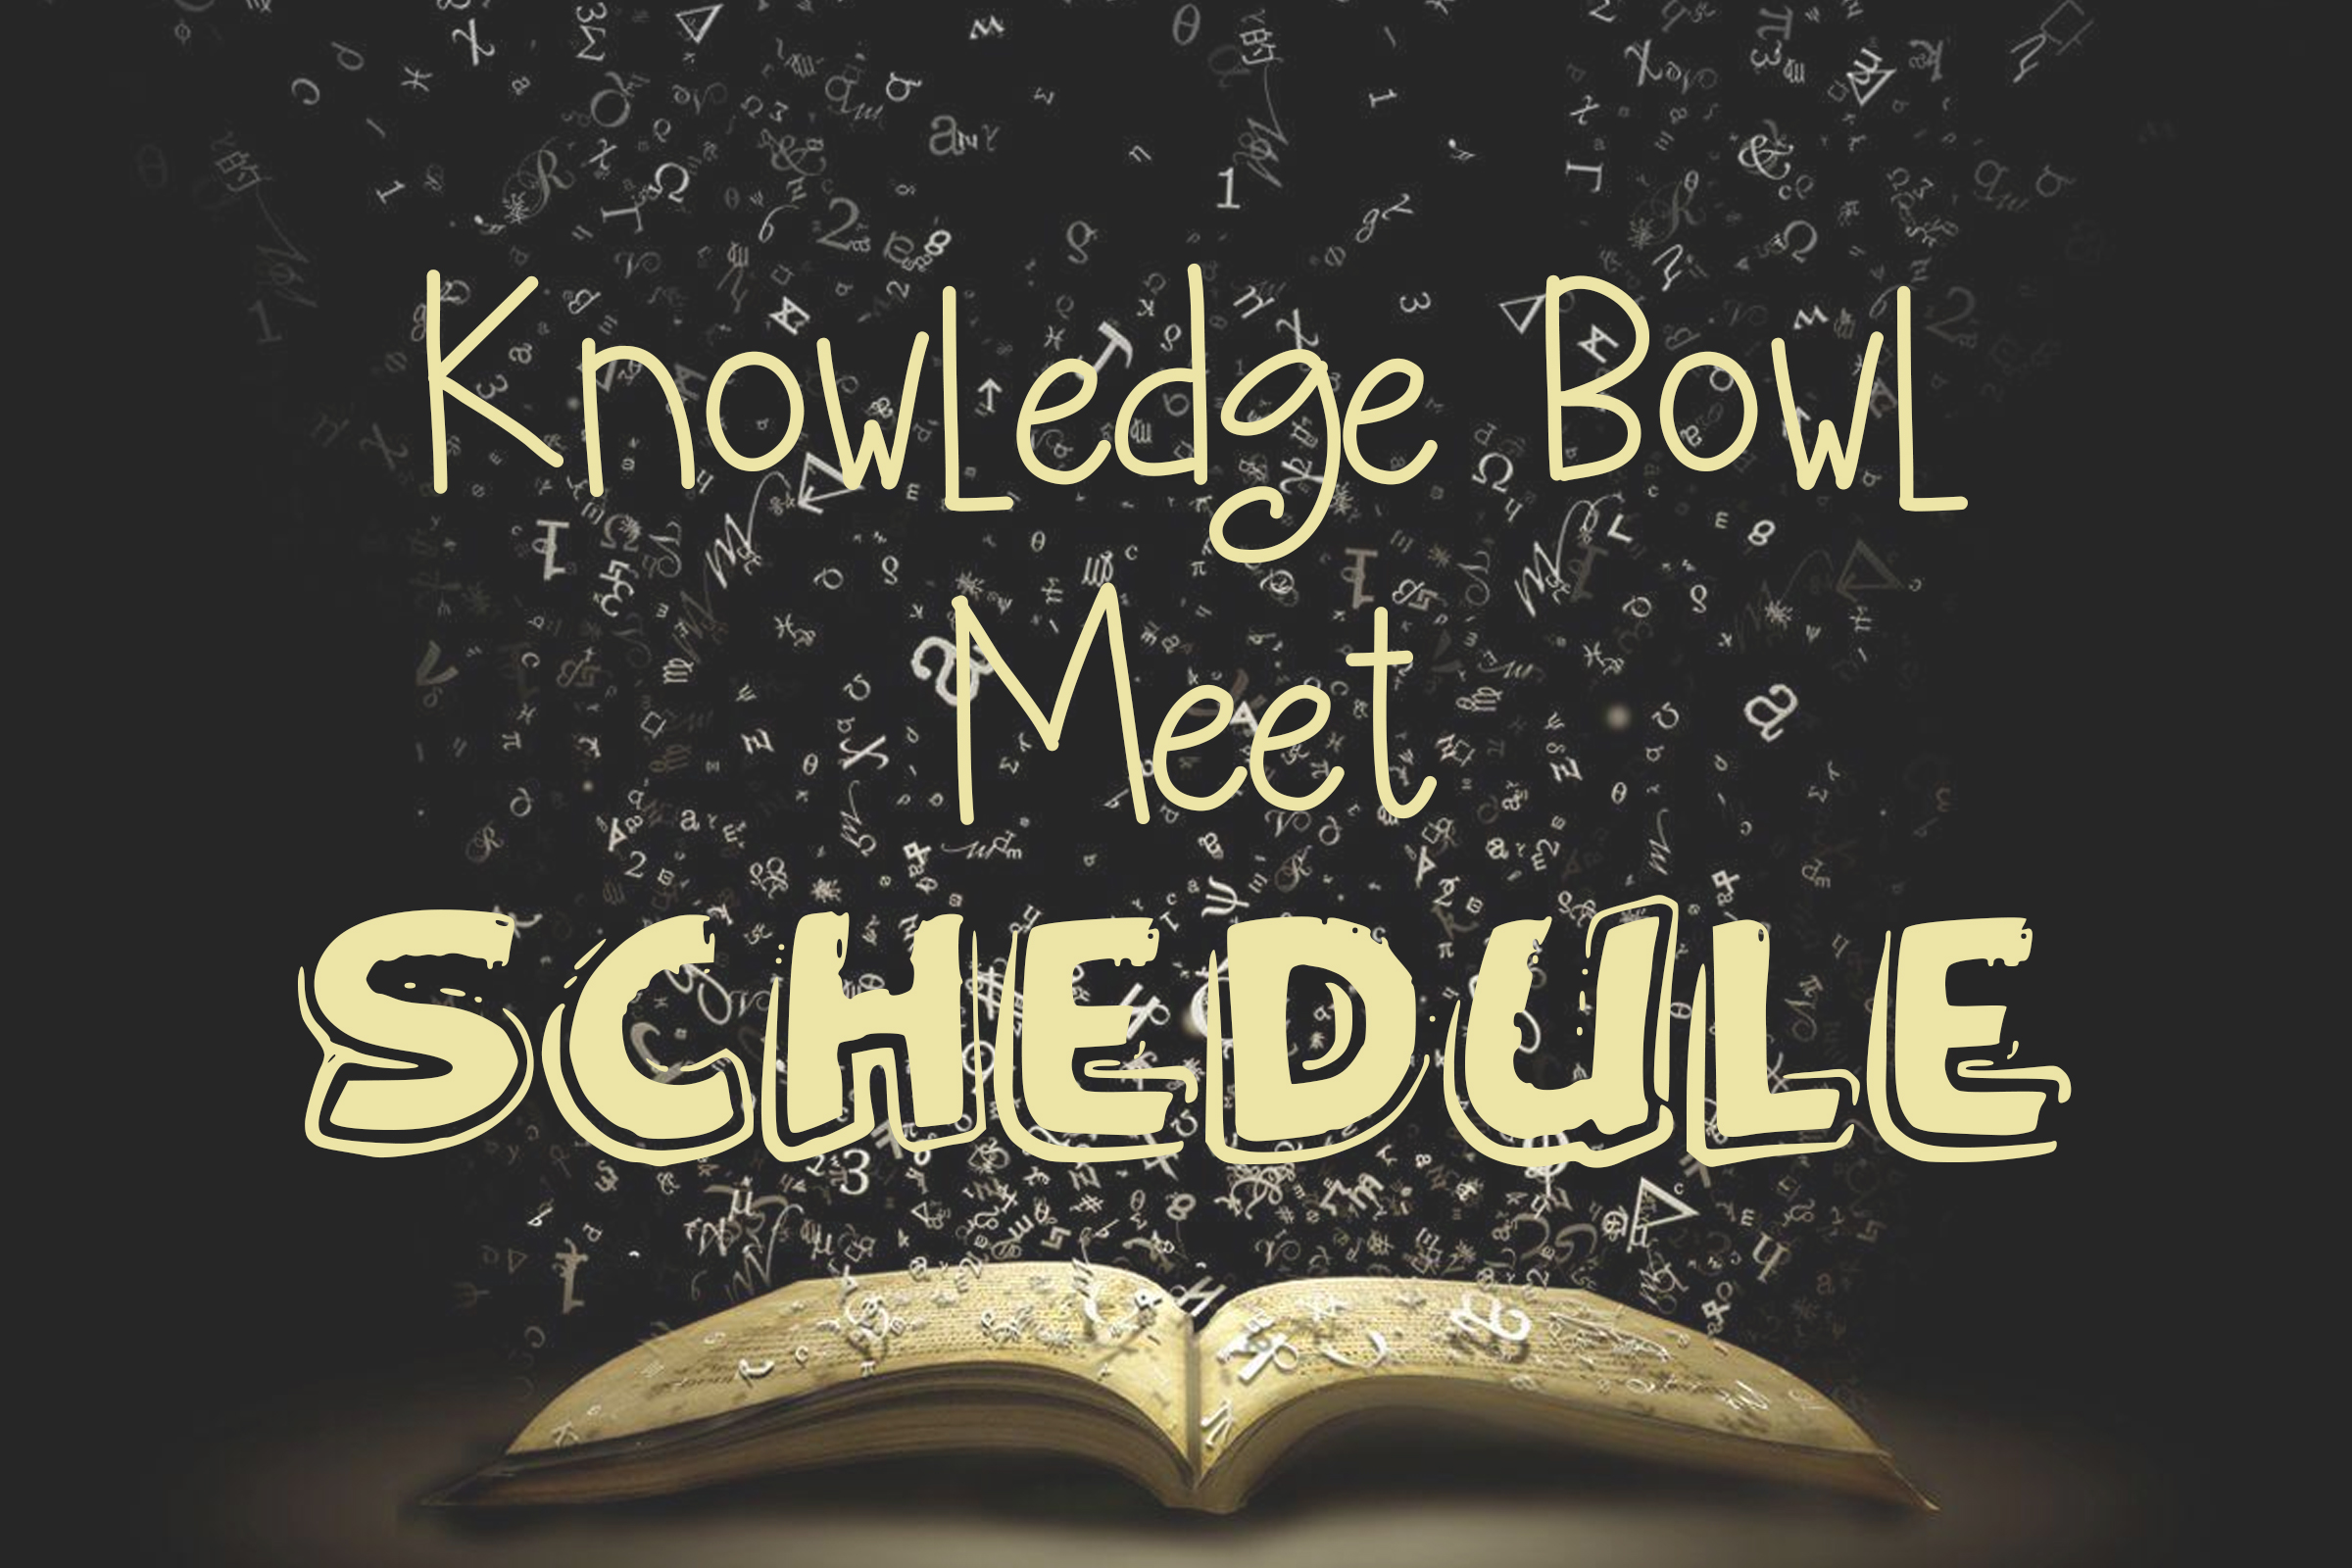 Knowledge Bowl Schedule